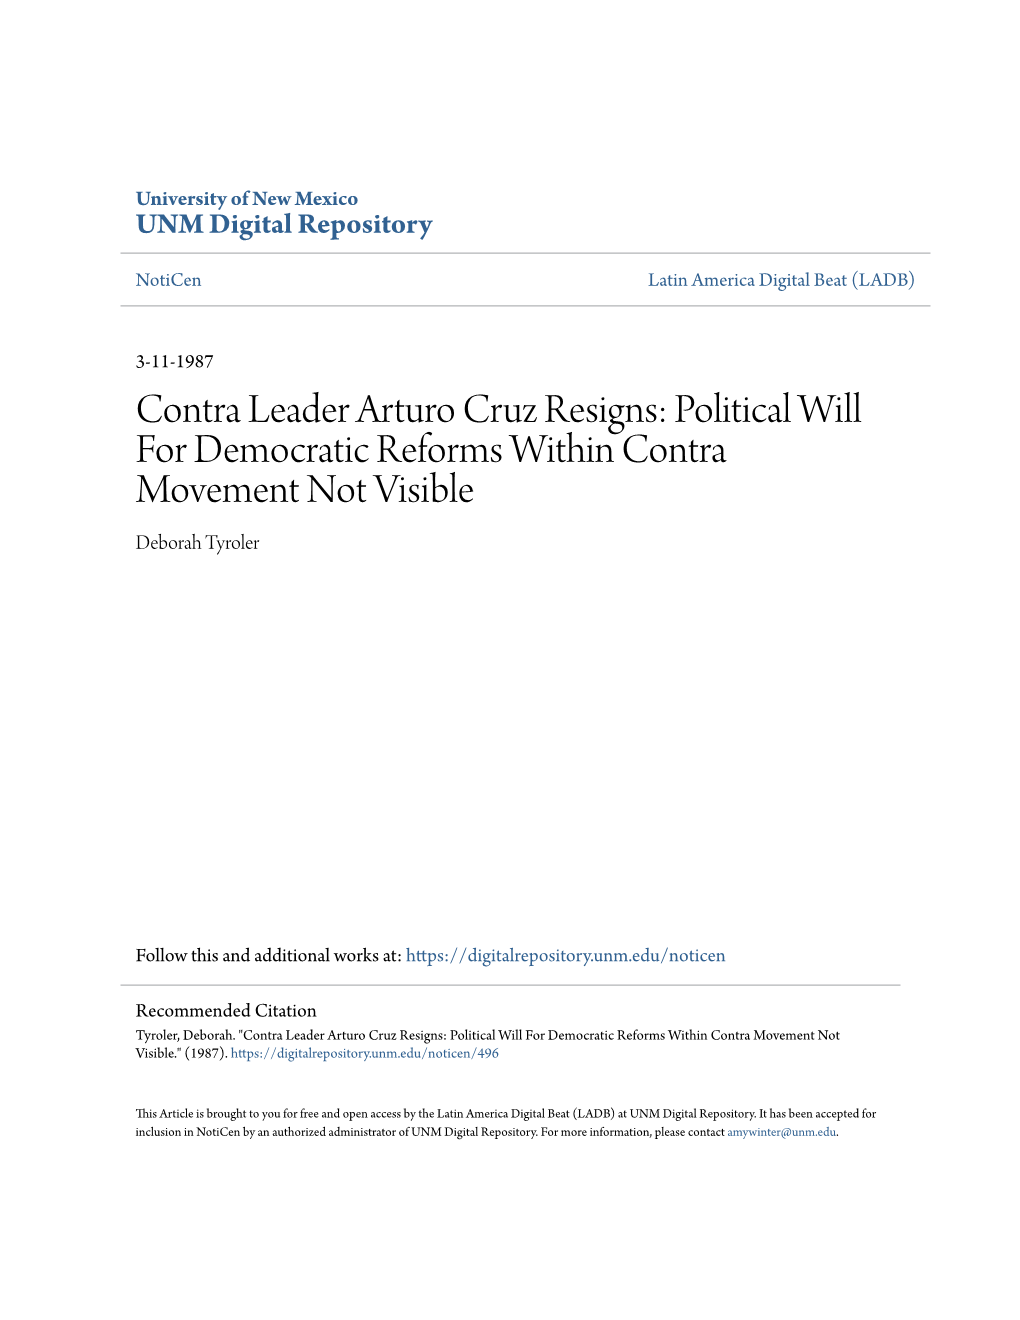 Contra Leader Arturo Cruz Resigns: Political Will for Democratic Reforms Within Contra Movement Not Visible Deborah Tyroler